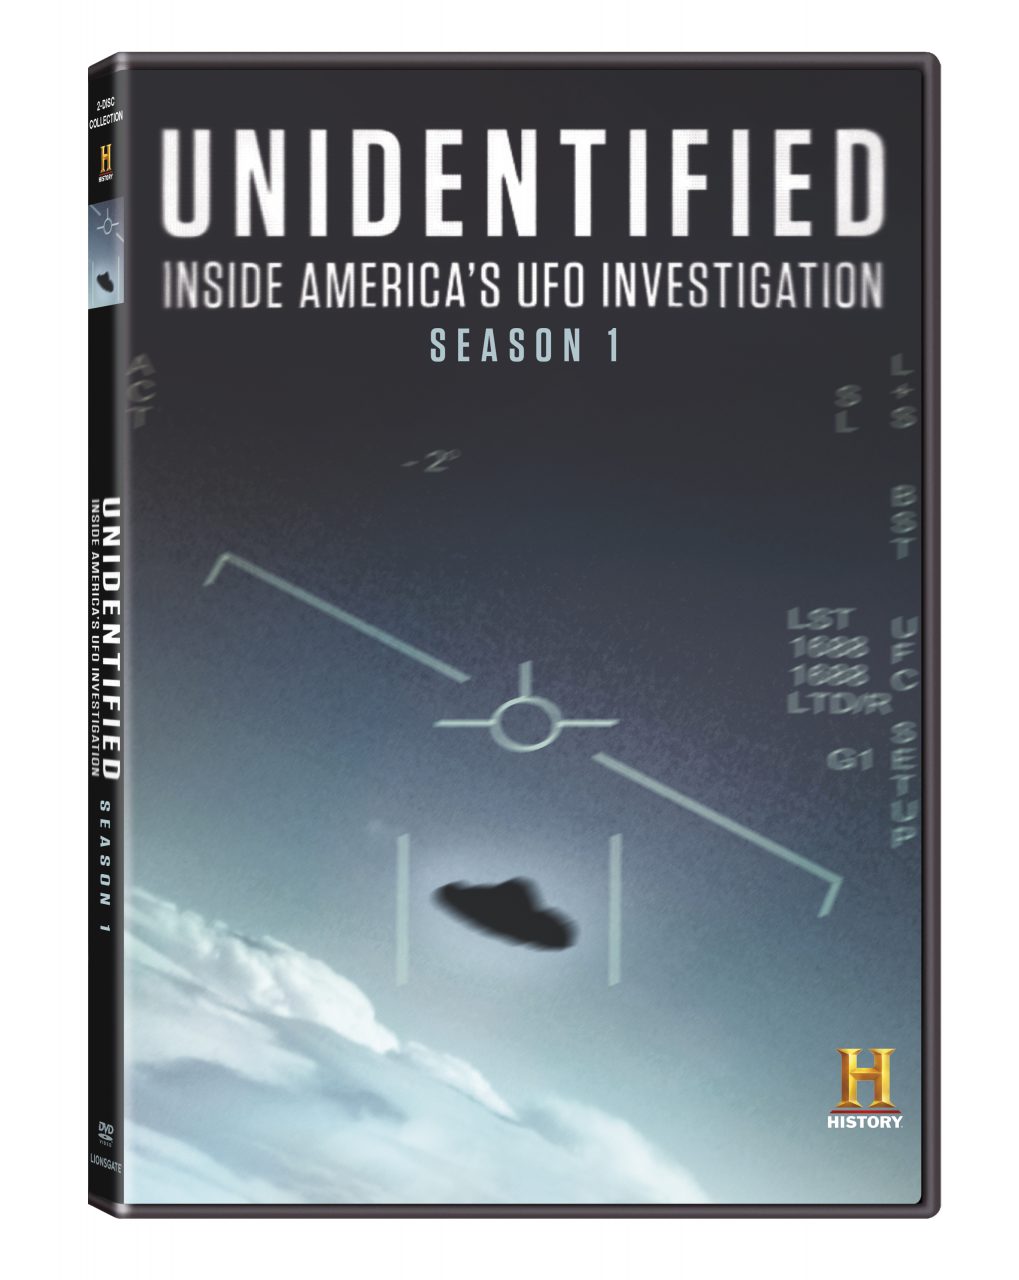 Unidentified: Inside America’s UFO Investigation: Season 1 DVD cover (Lionsgate Home Entertainment/HISTORY)